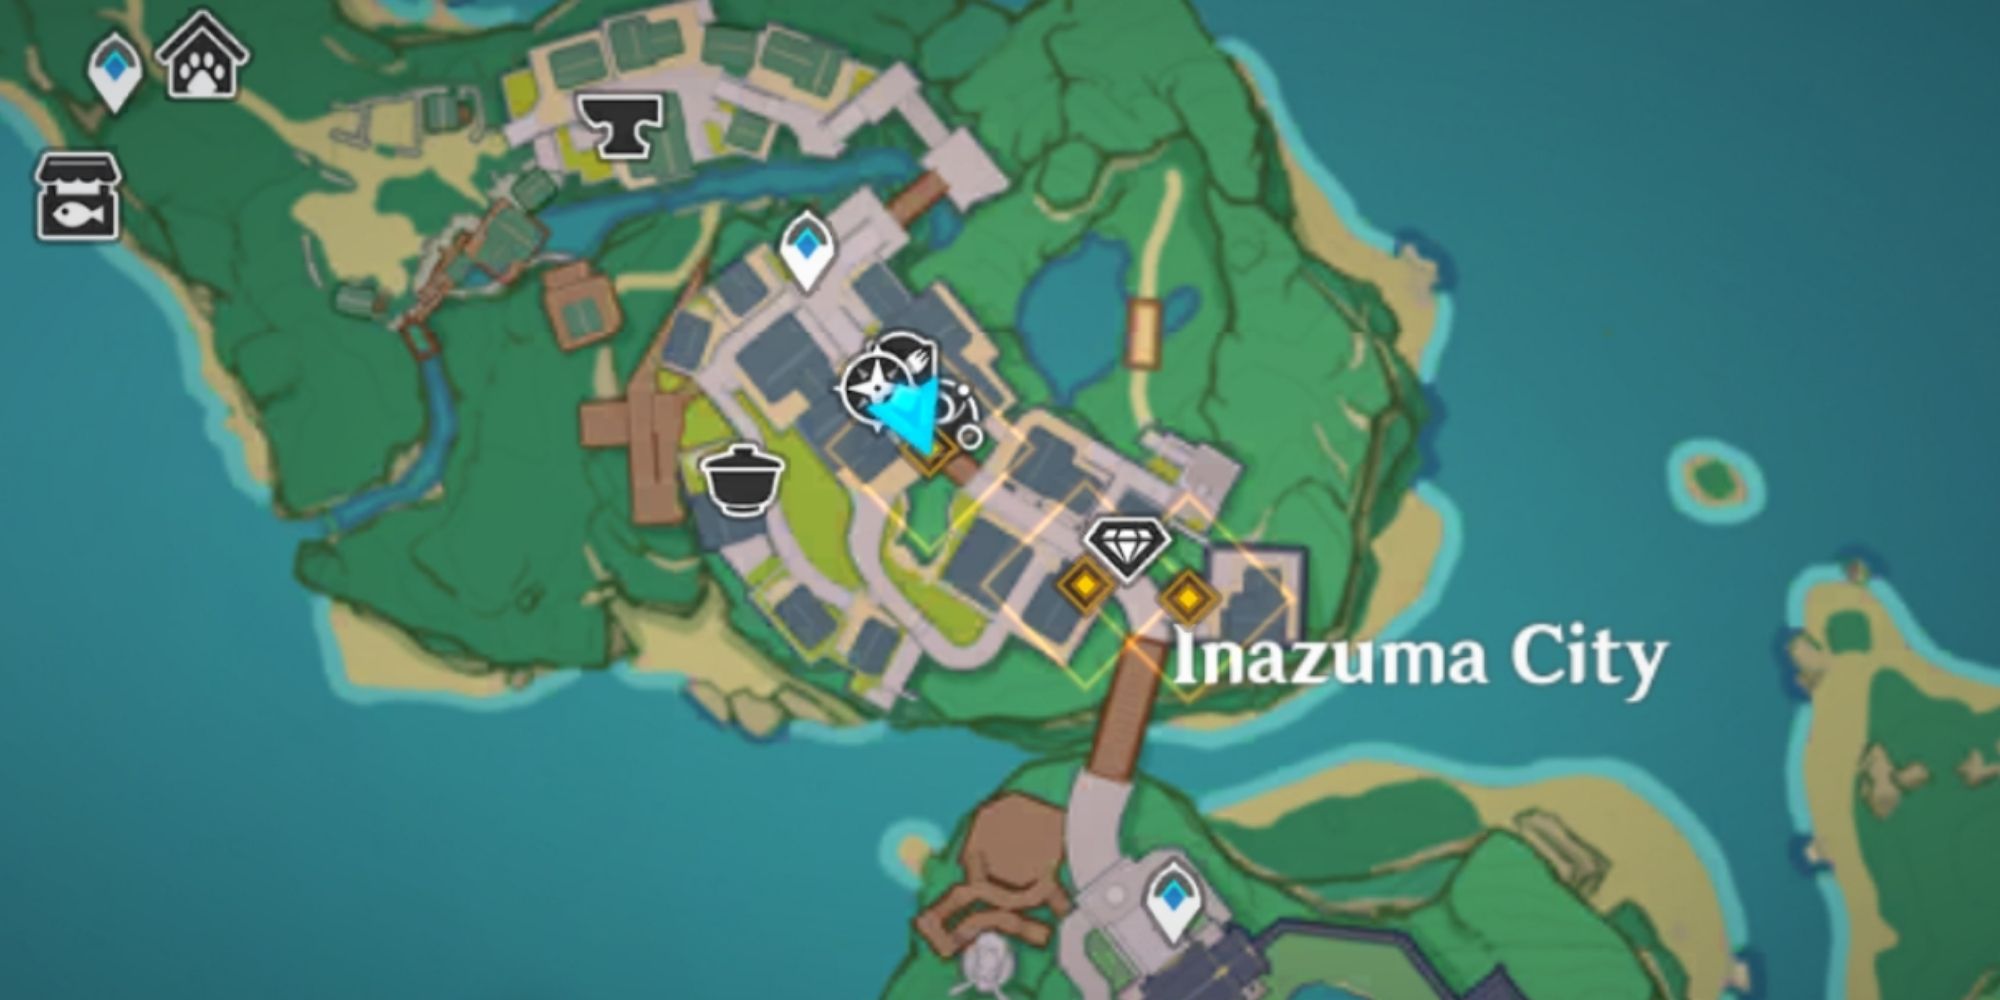 Talk to three people in Inazuma City